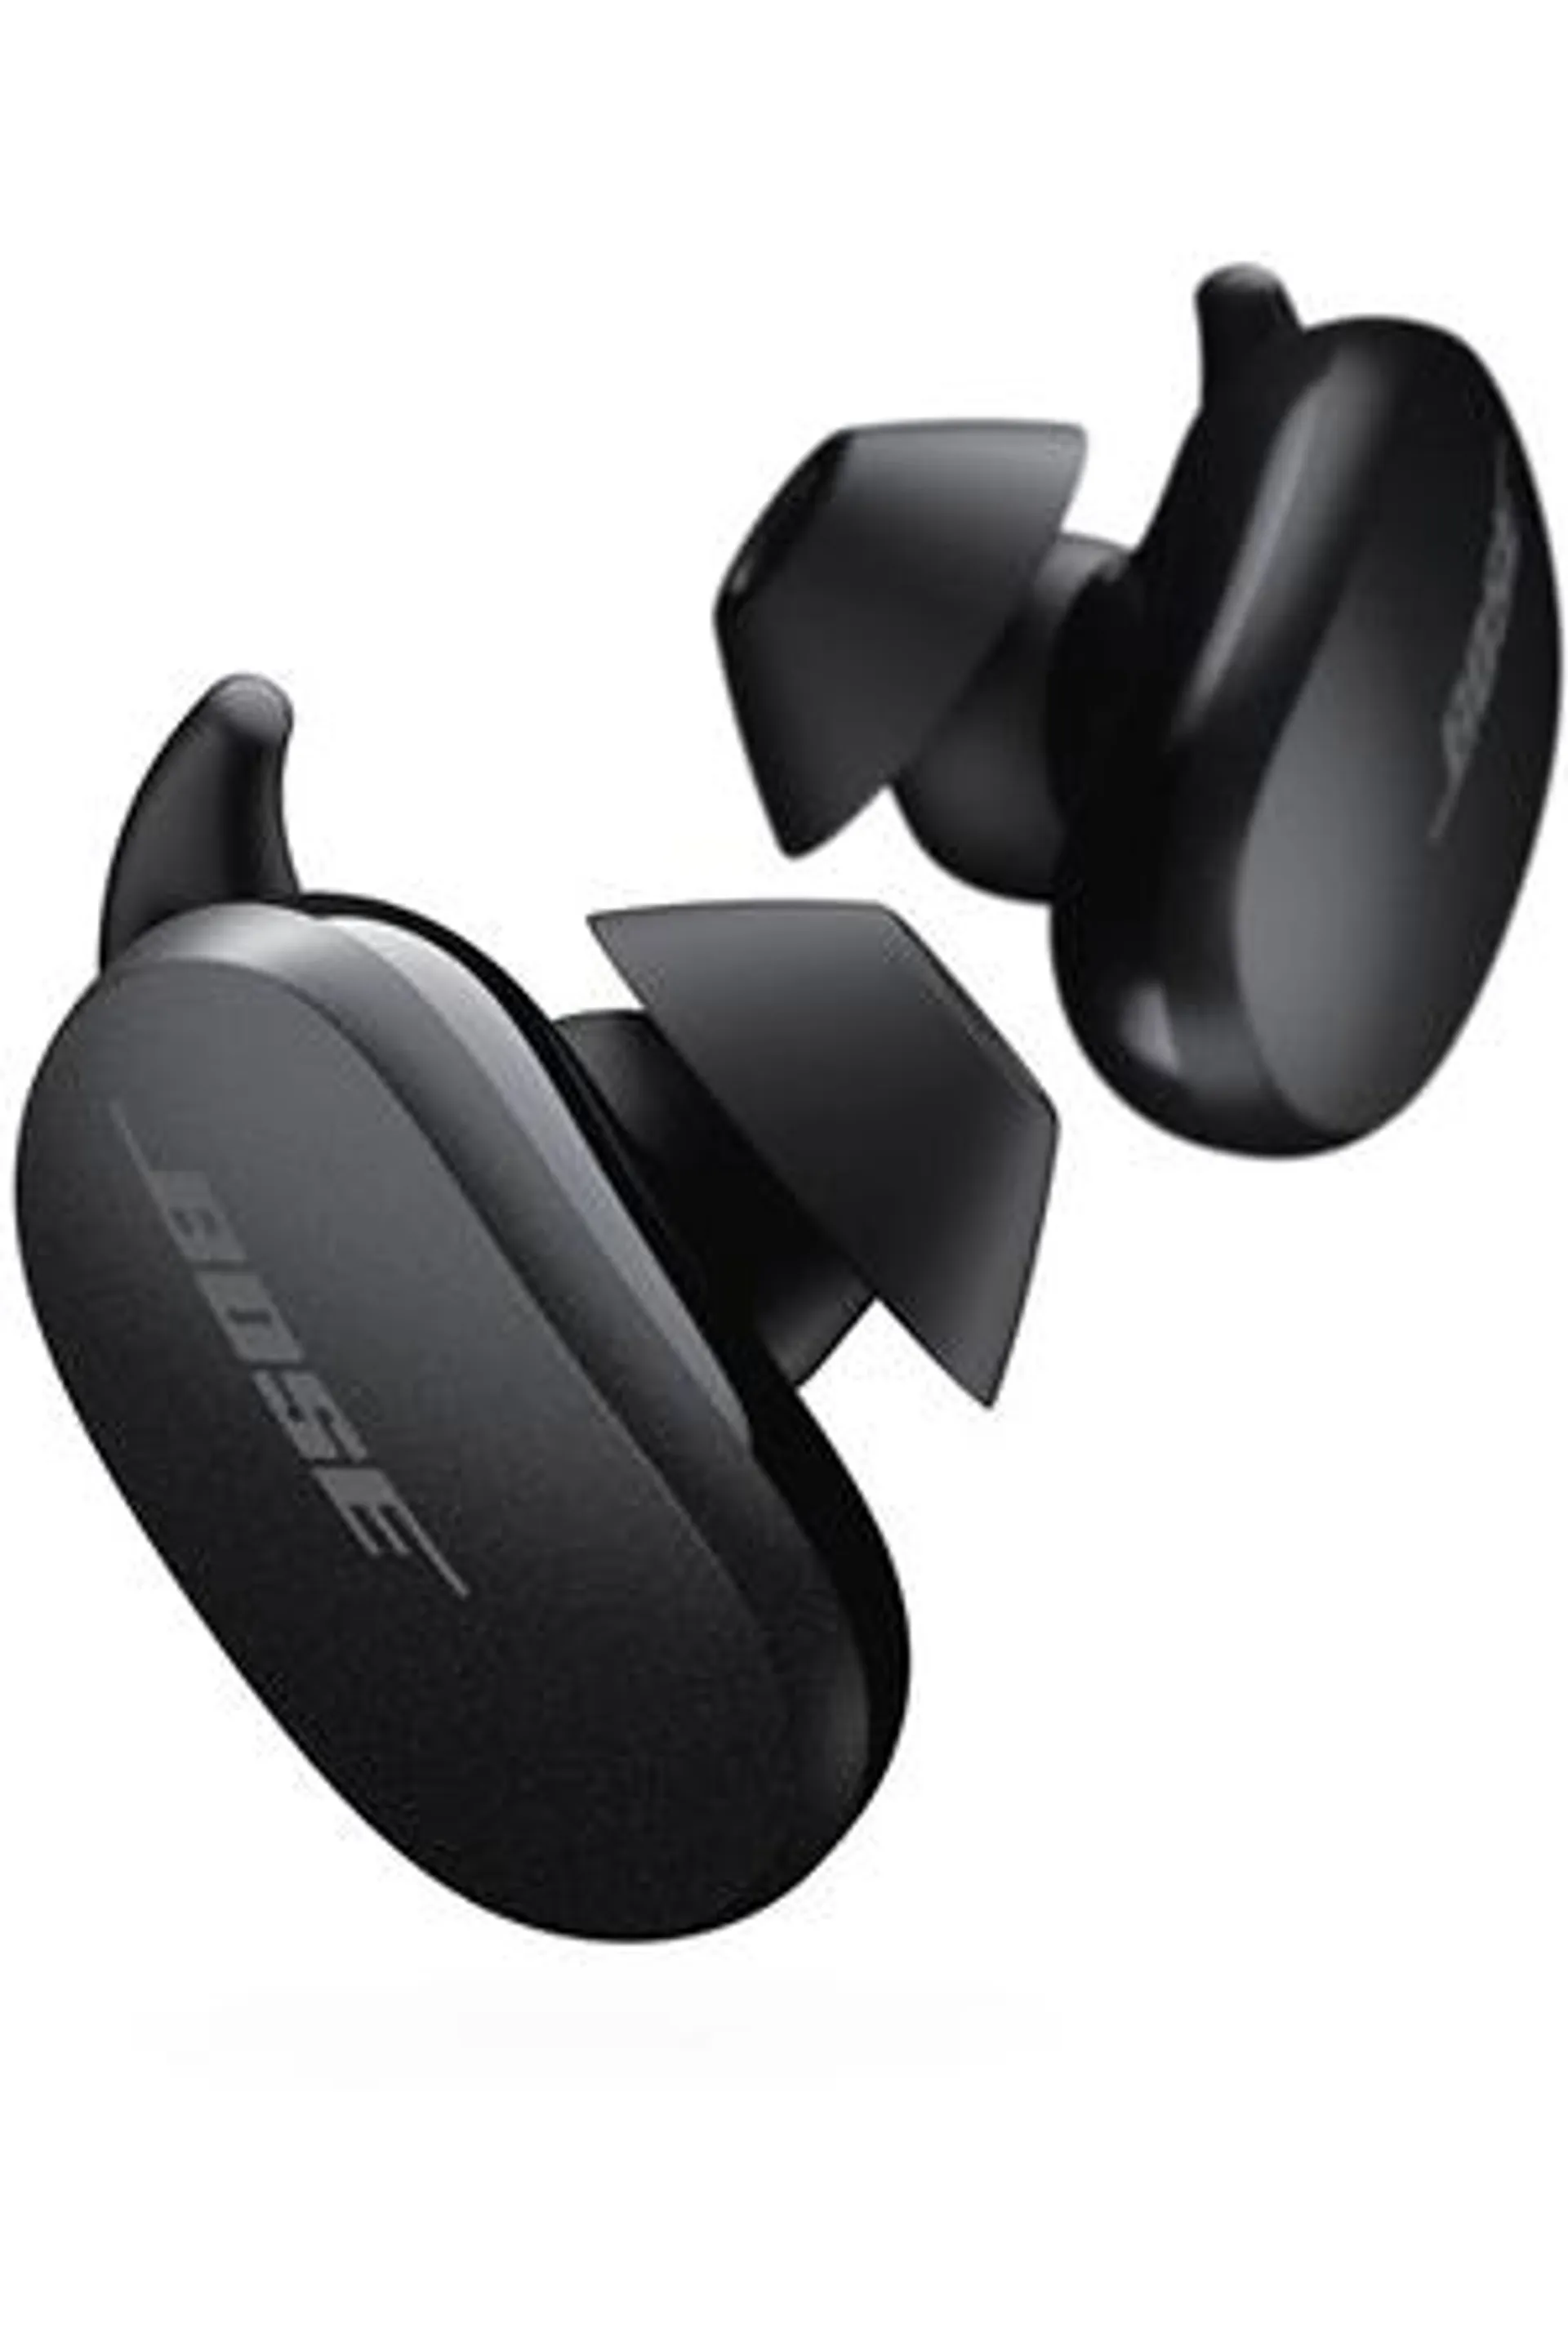 Bose QC Earbuds Noir